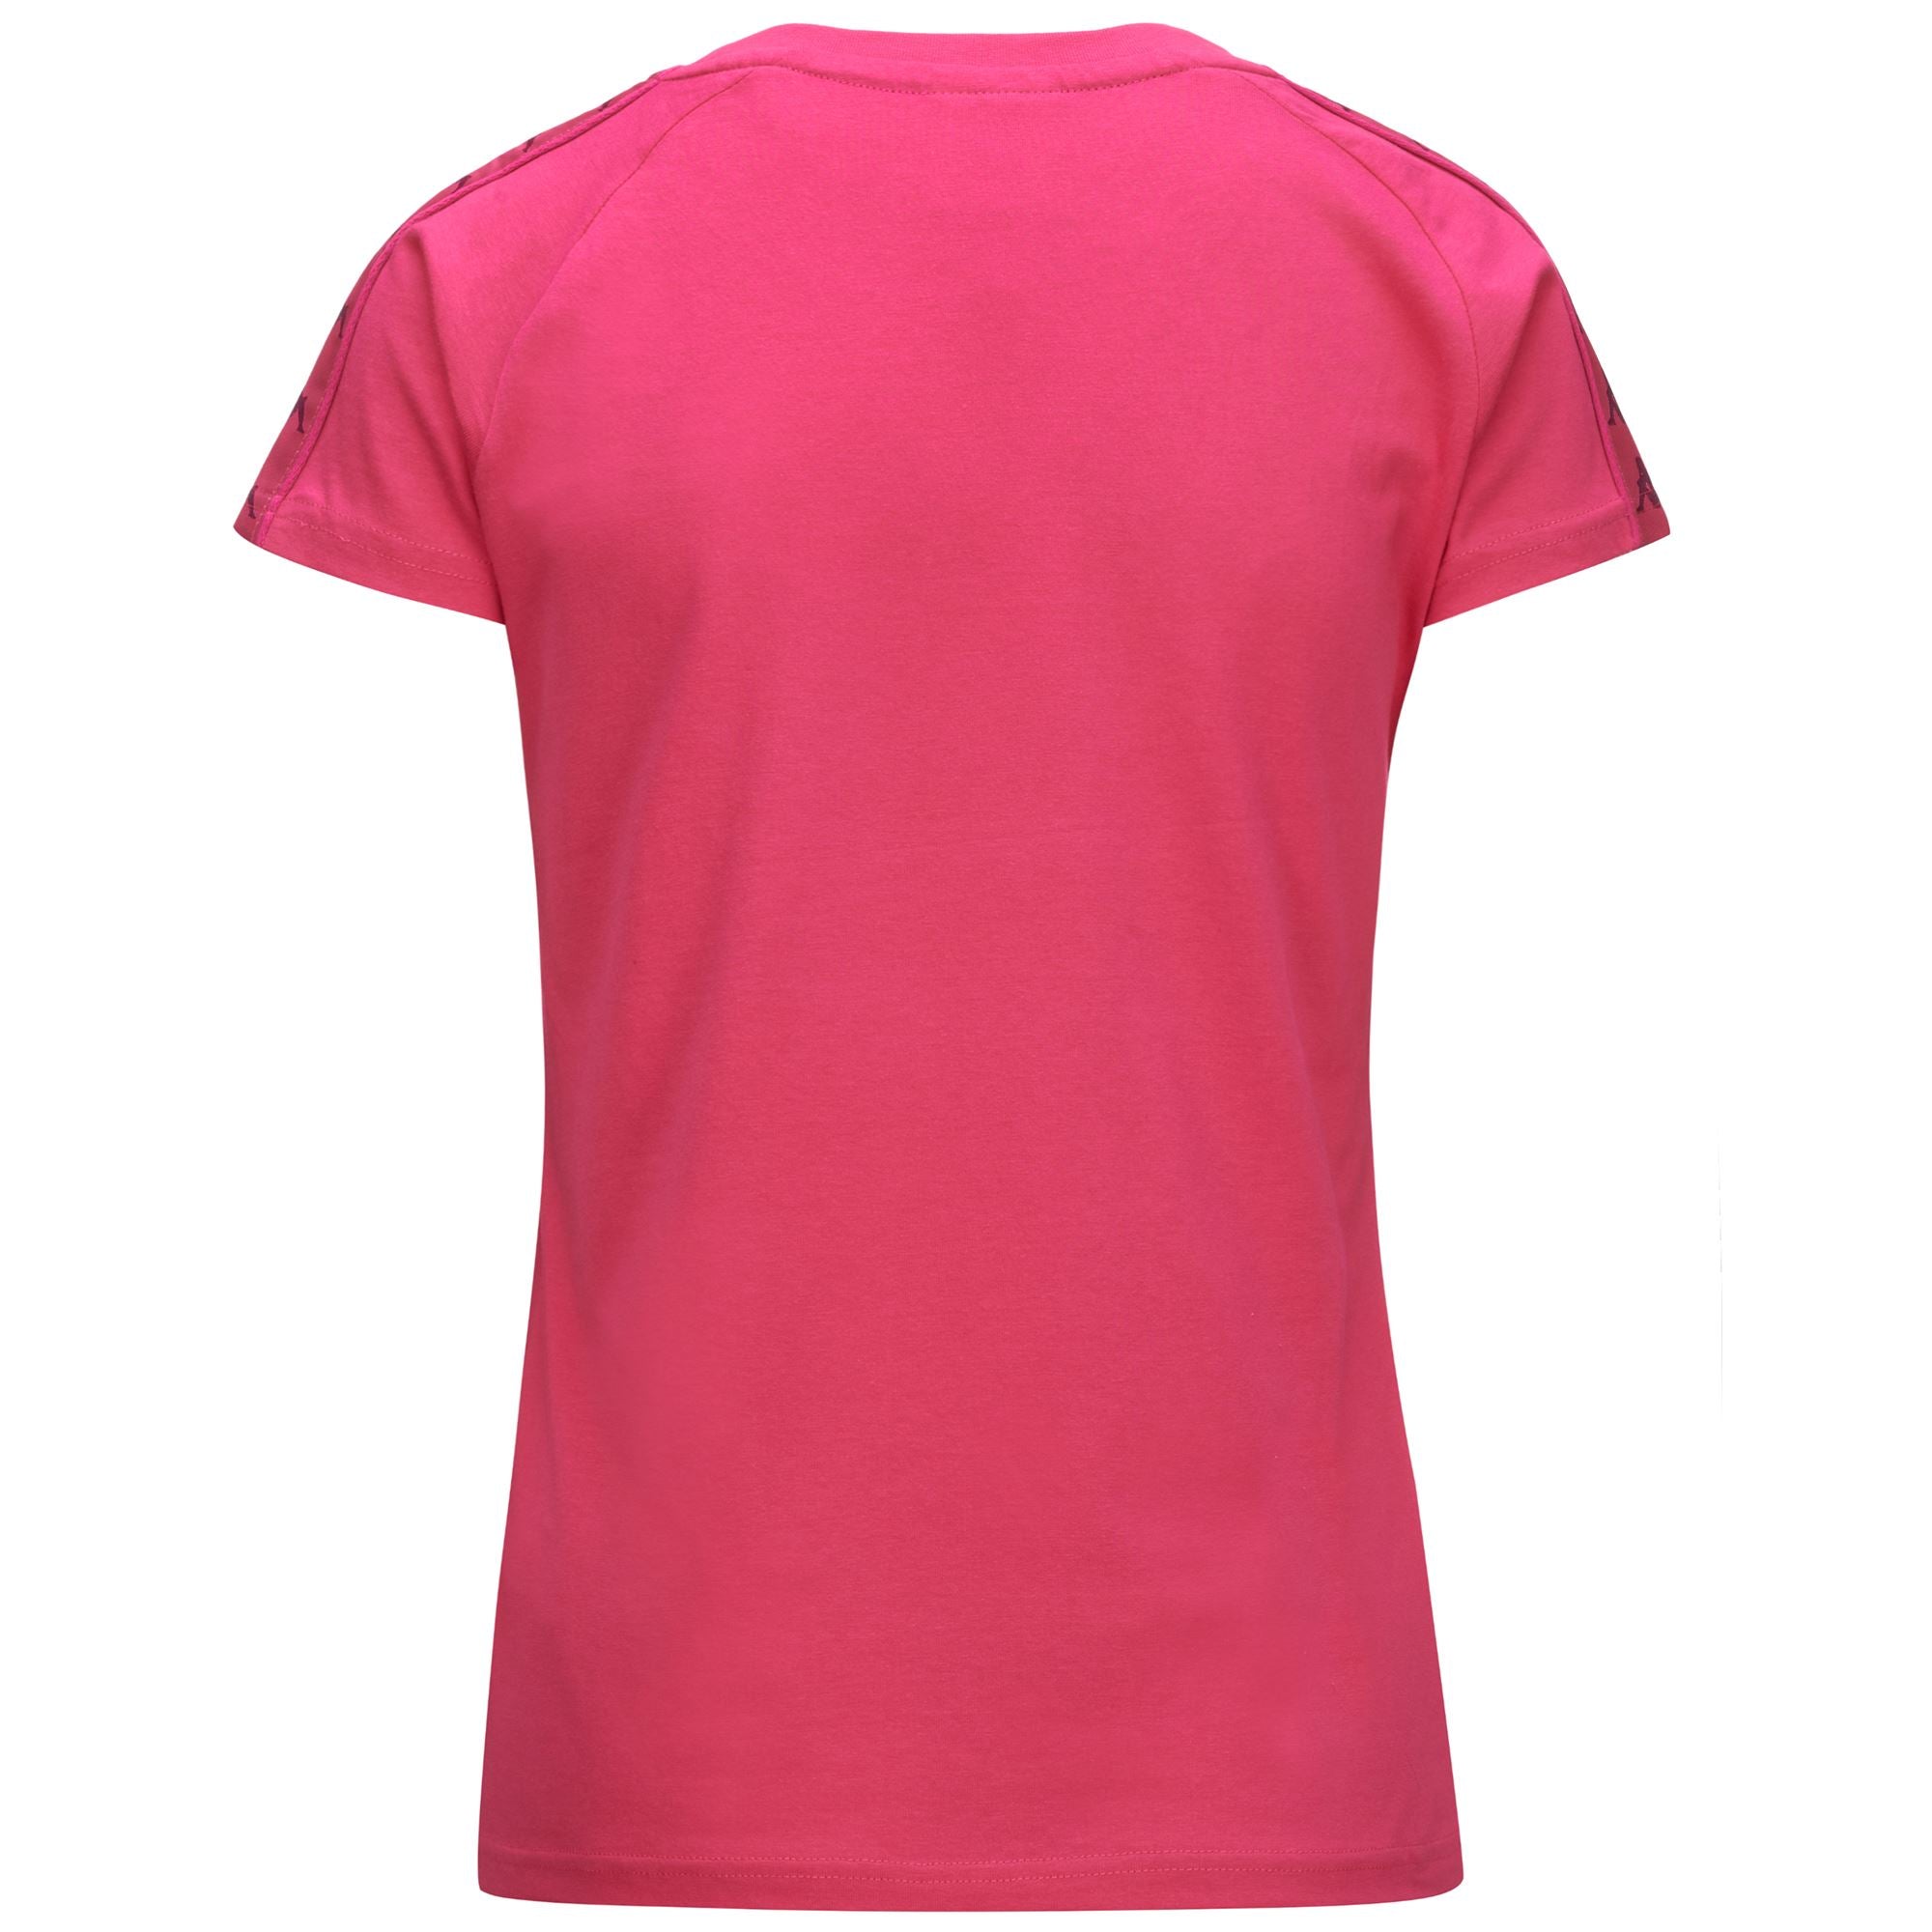 222 BANDA APAN - T-ShirtsTop - T-Shirt - Woman - FUCHSIA BRIGHT  ROSE-FUCHSIA PURPLE